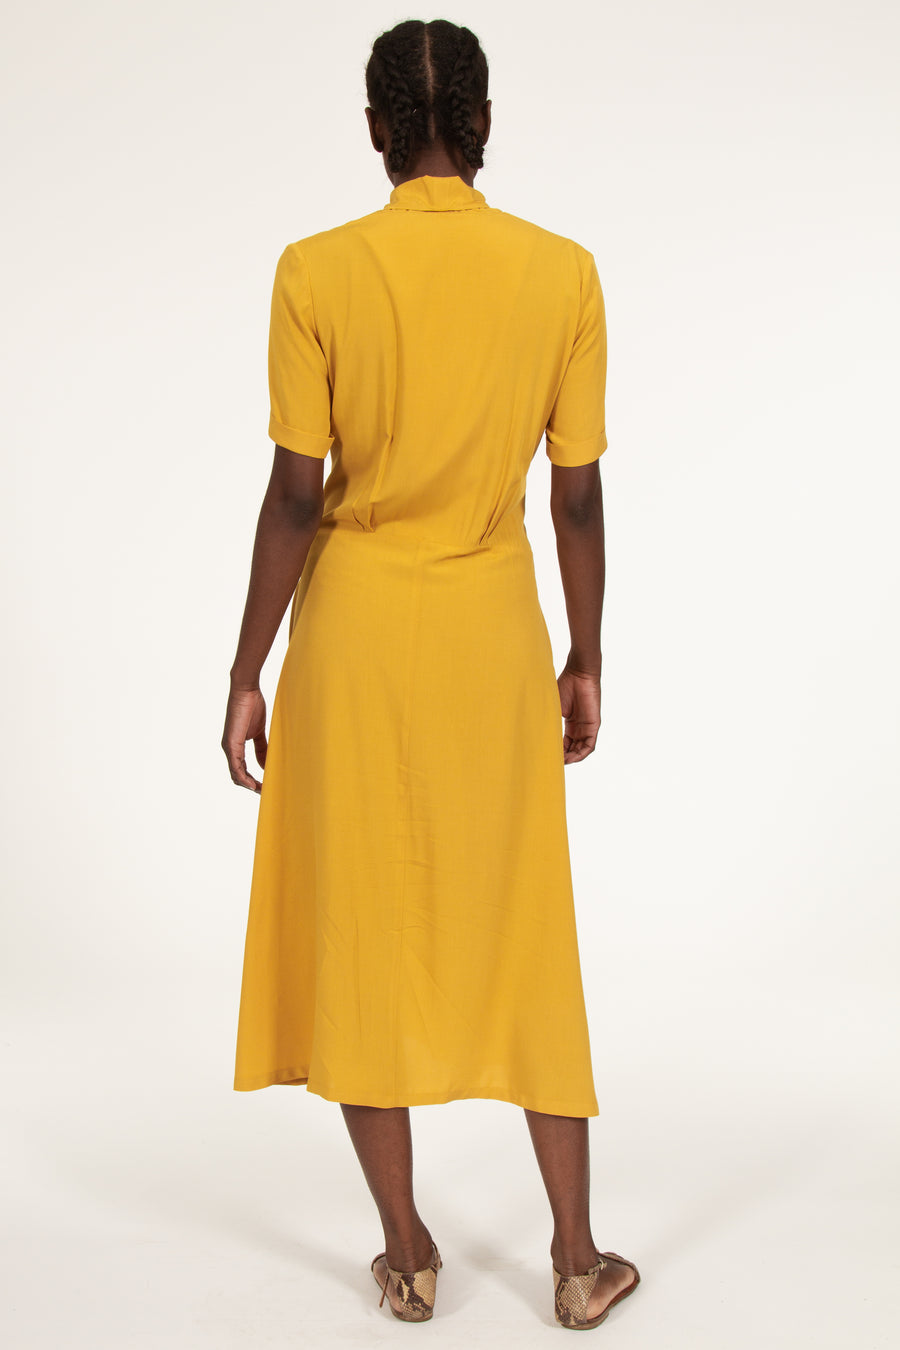 JUNON Yellow Dress 